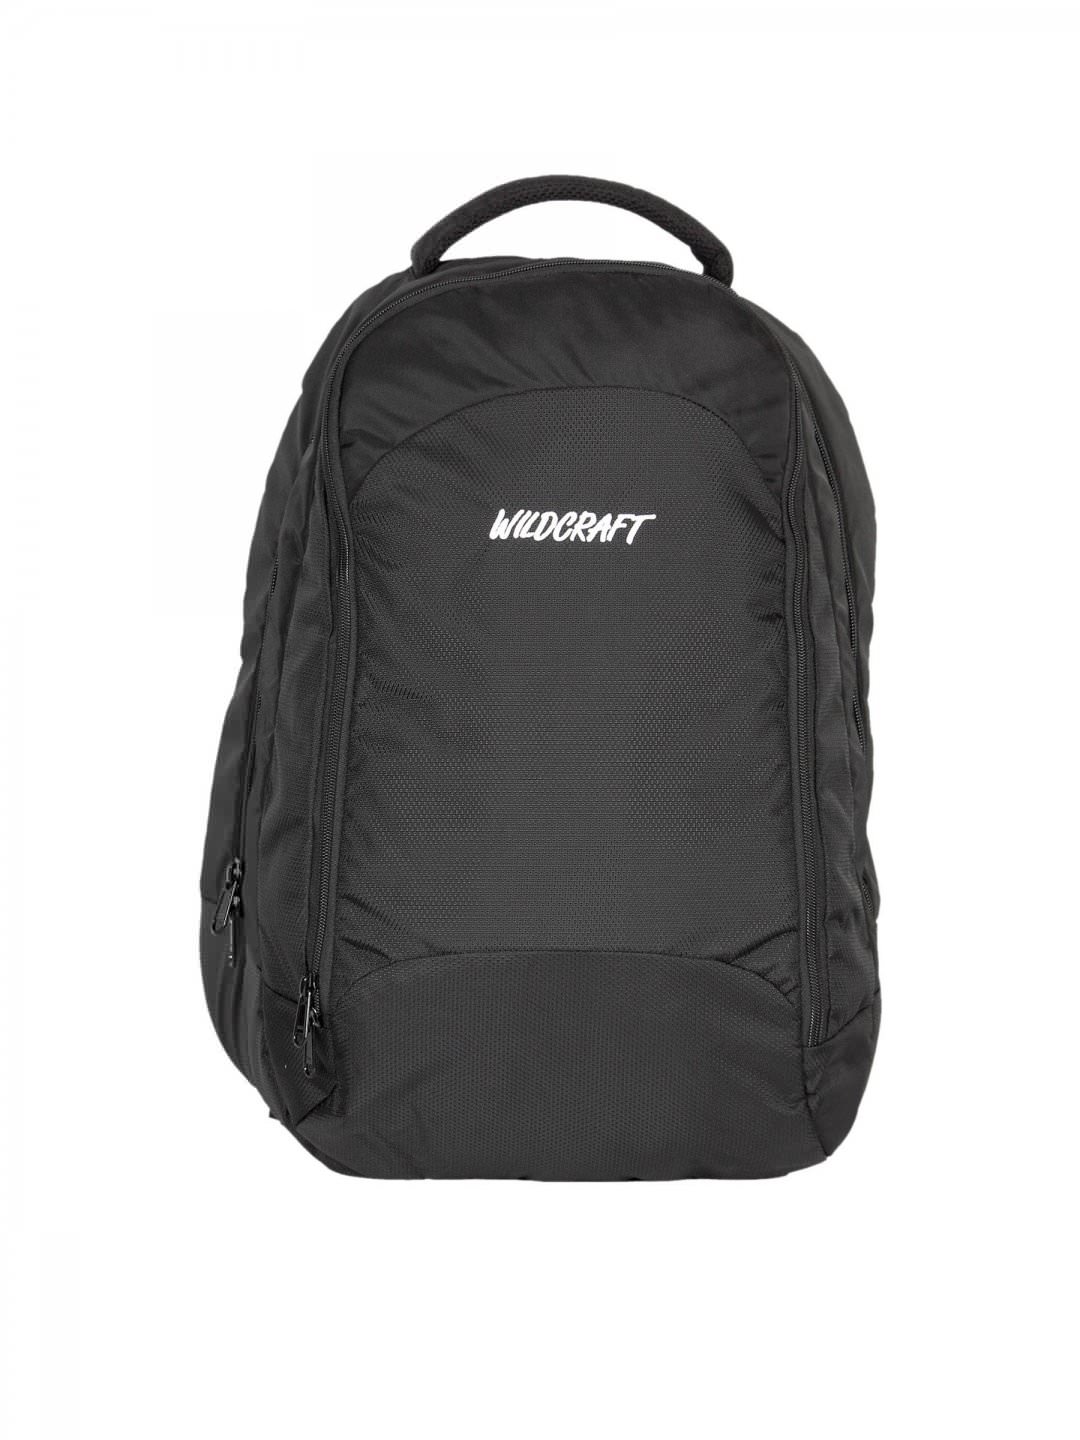 Wildcraft Unisex Black Corporate Backpack